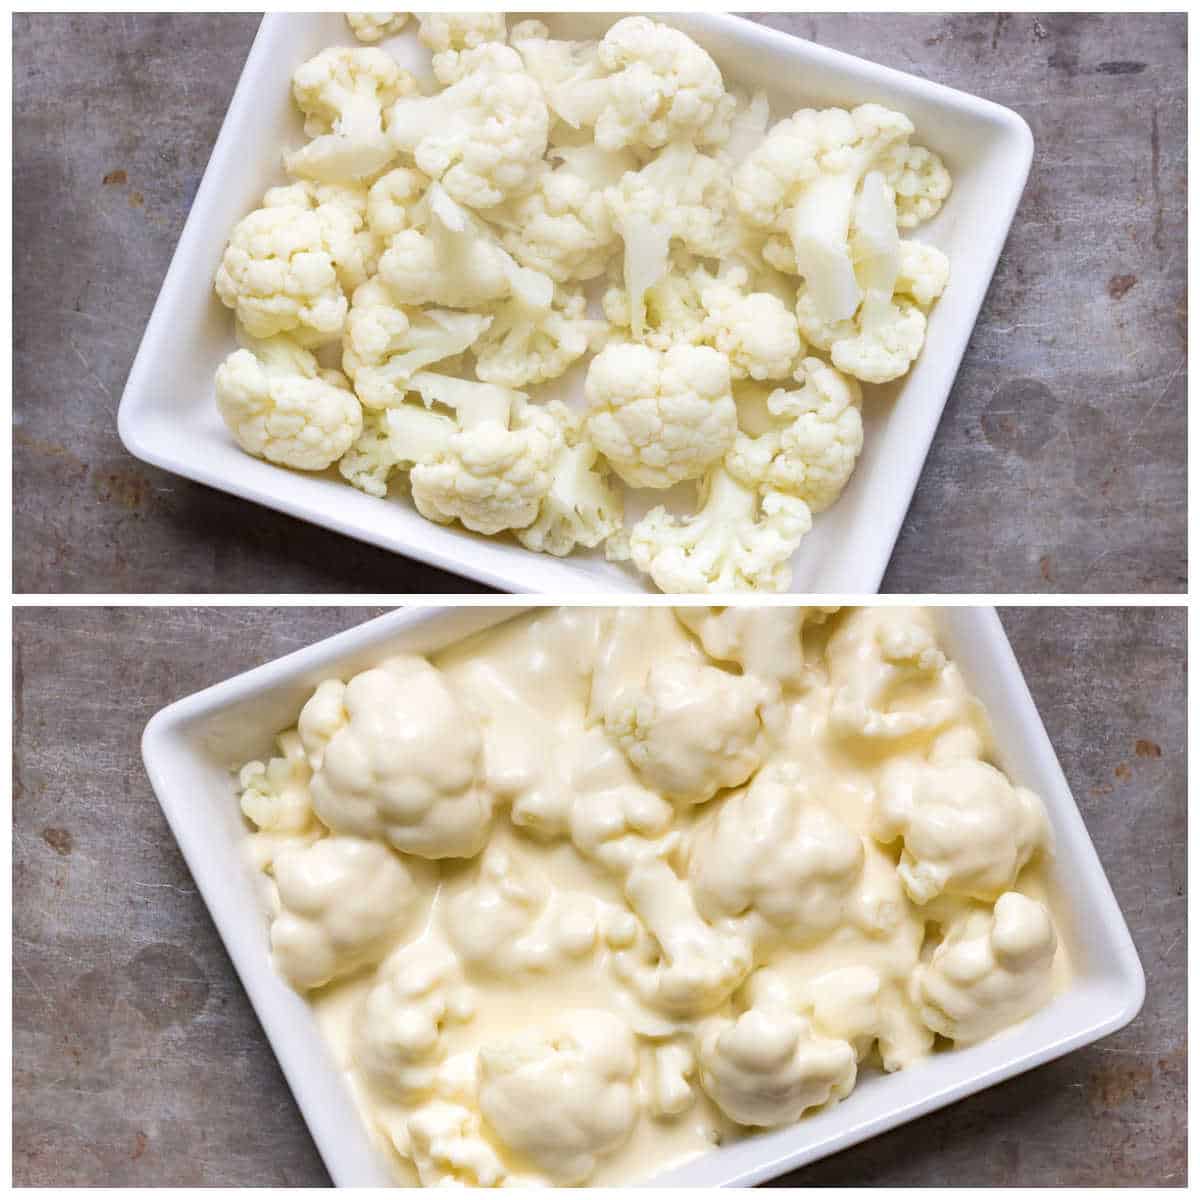 Collage: Casserole dish of cauliflower, cheese sauce added.